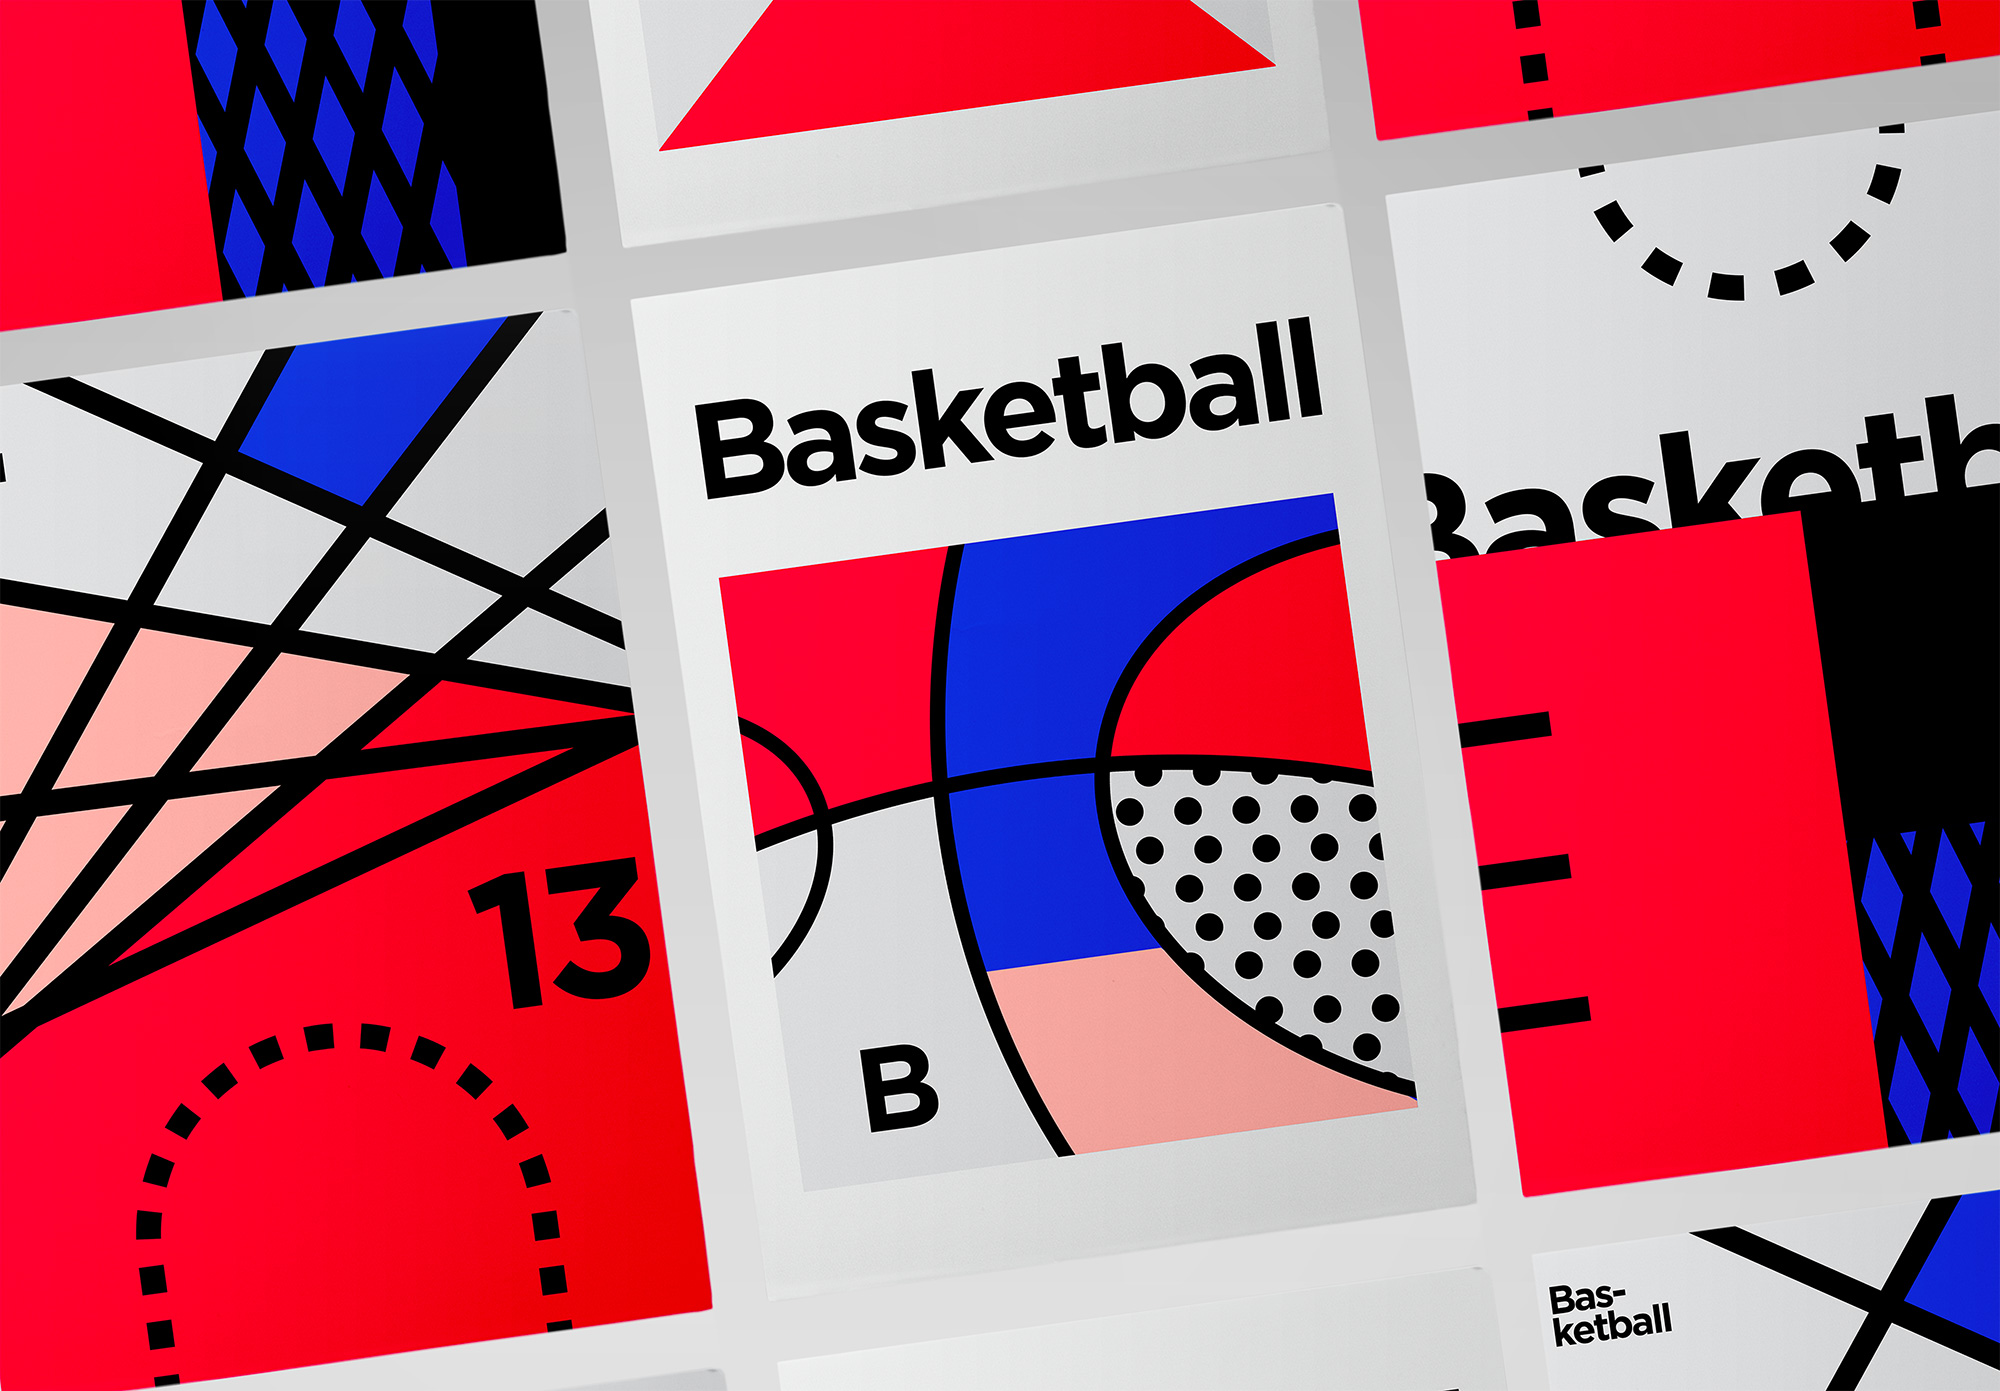 Minimalist Graphic Design - Basketball & Tennis